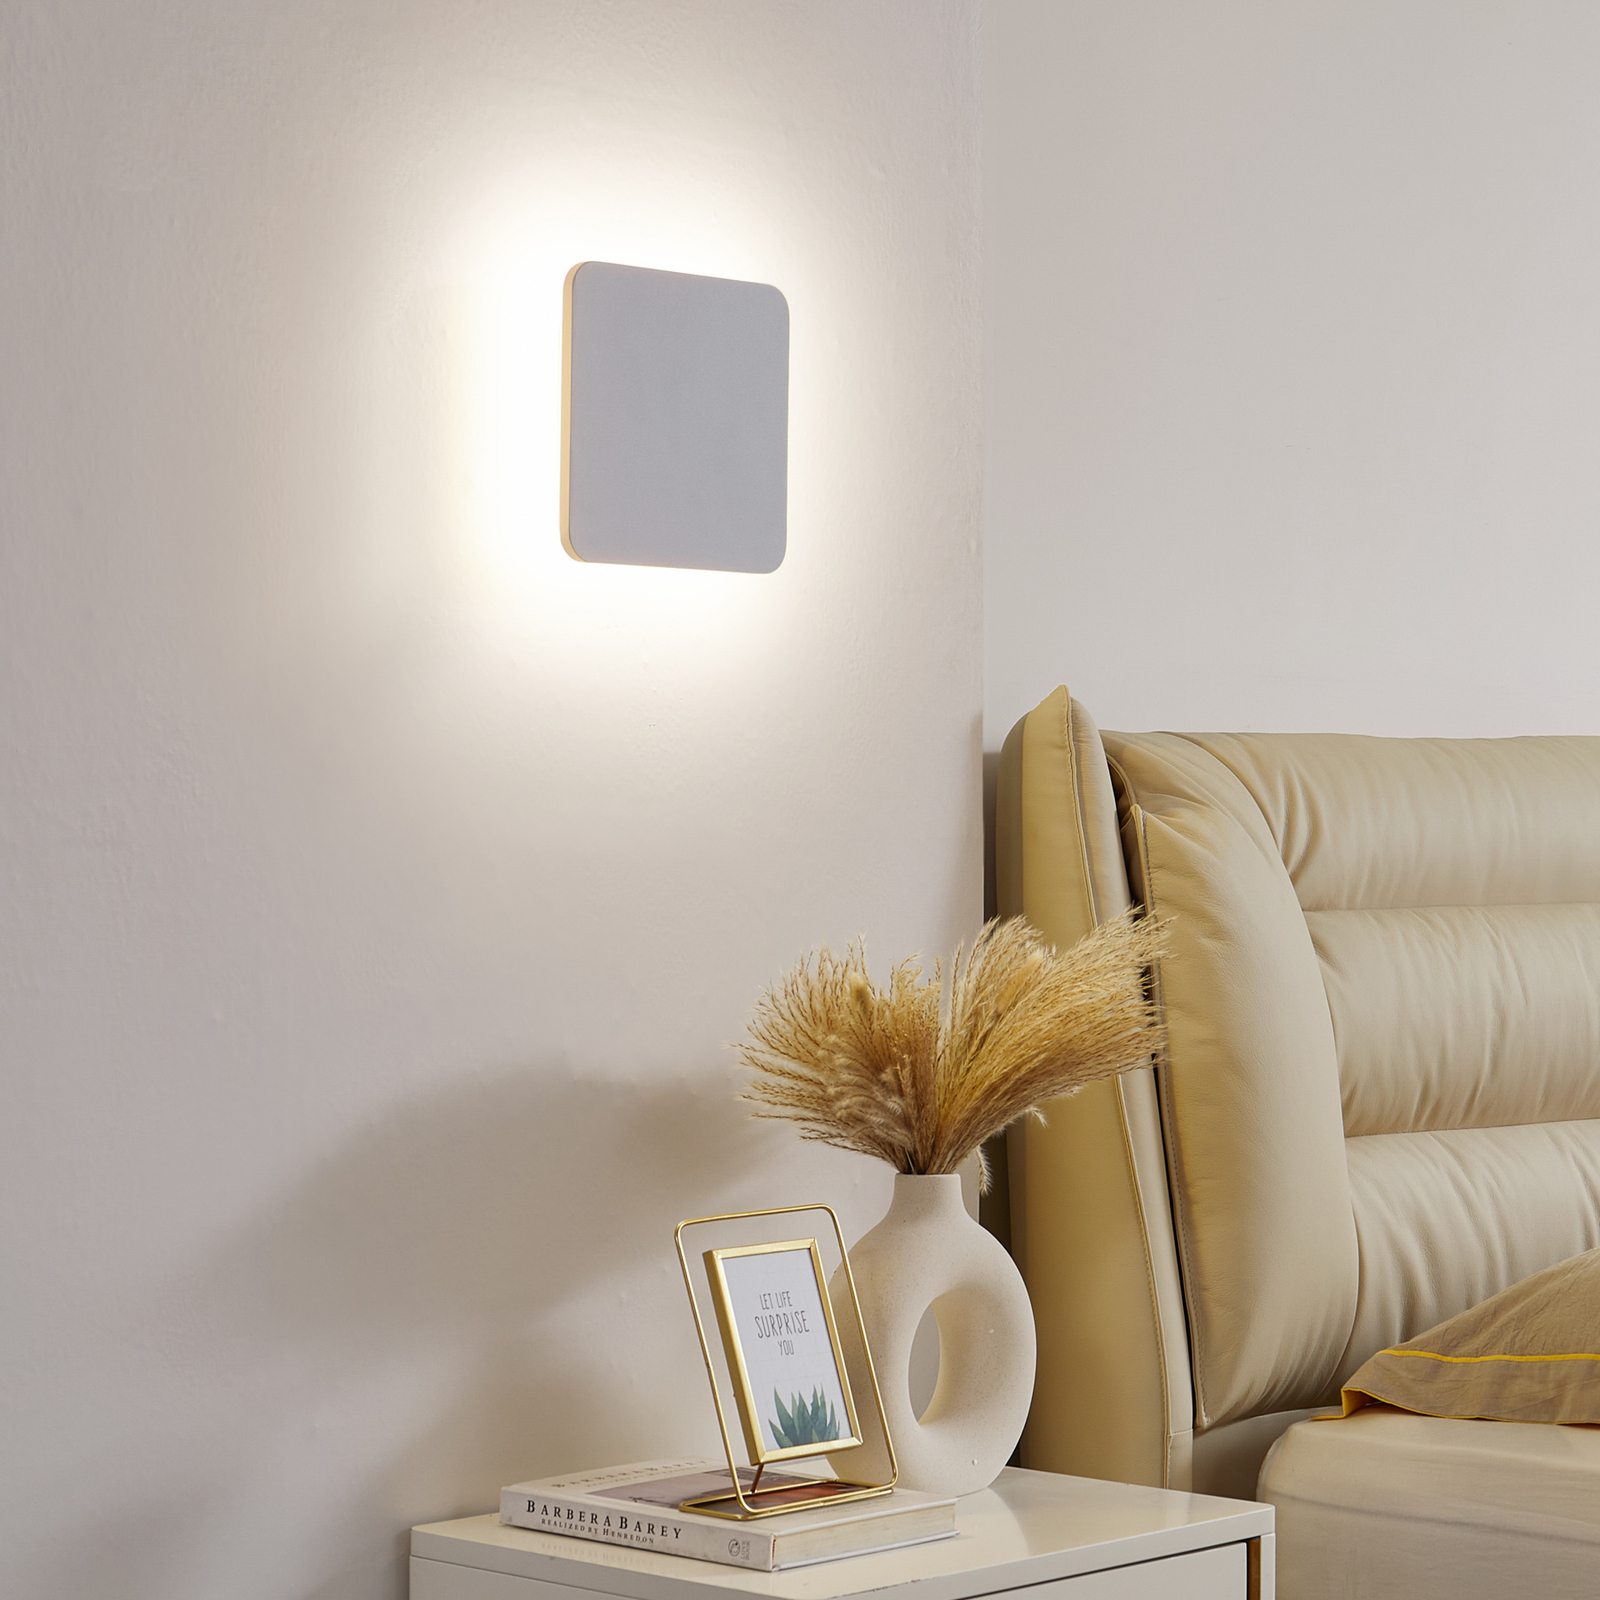 Lucande LED wall light Elrik, white, 22 cm high, metal